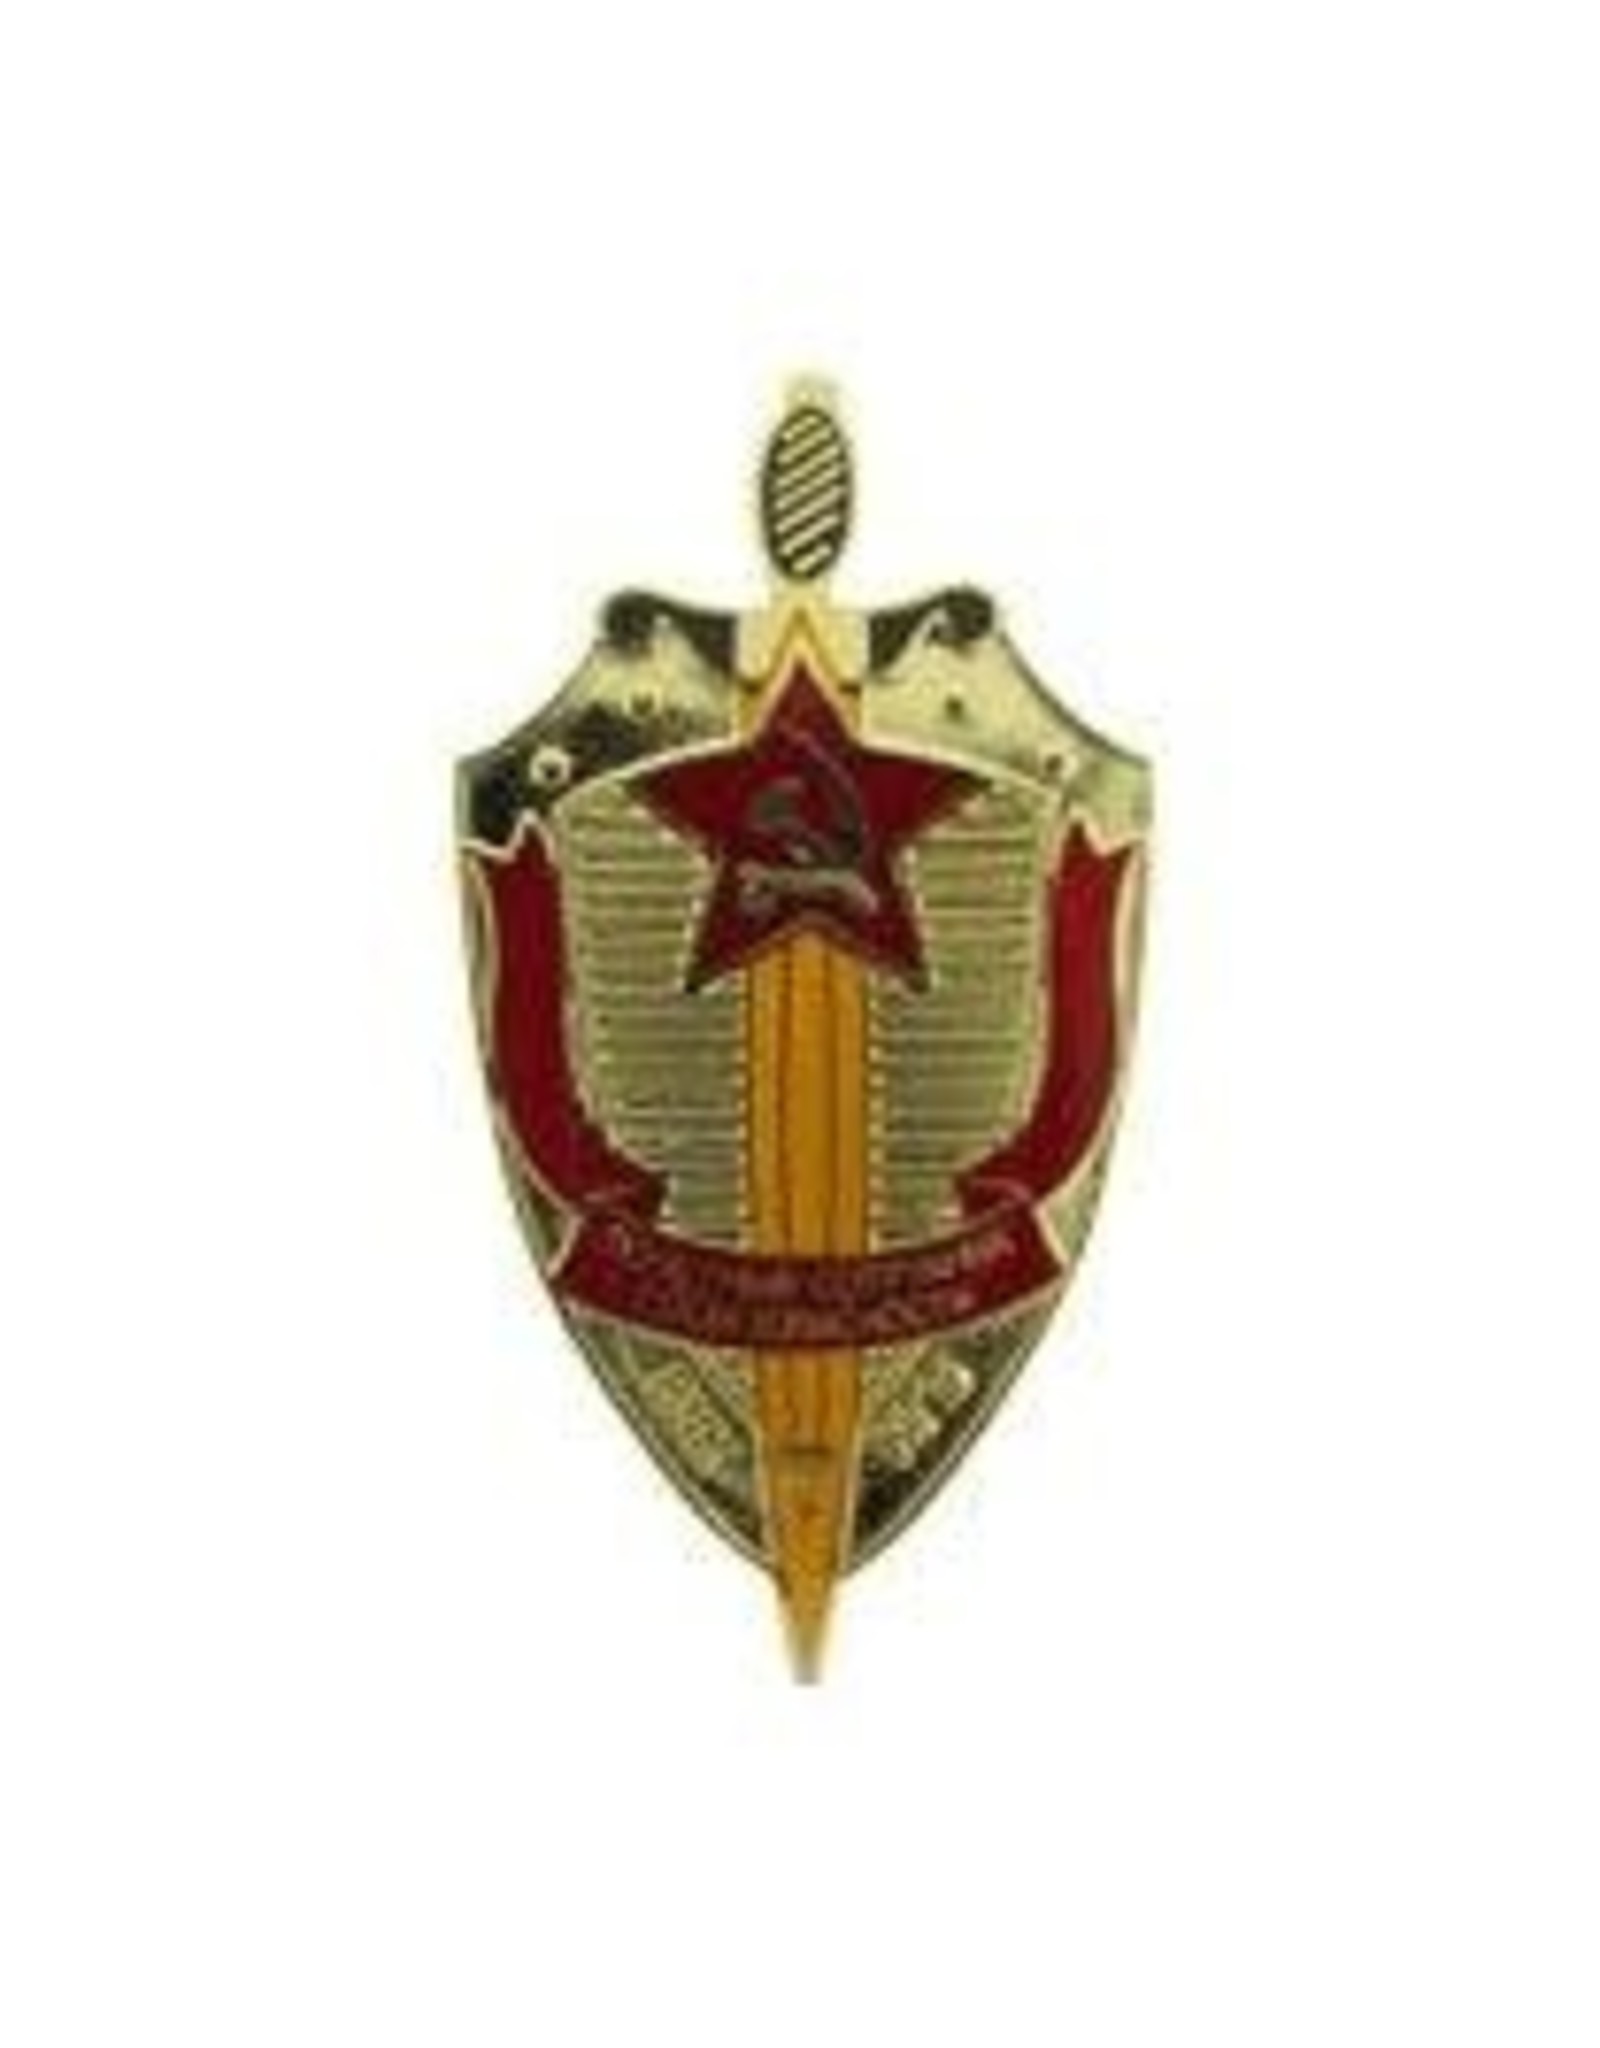 Pin - Full Size Badge Russia KGB, 3 1/4"